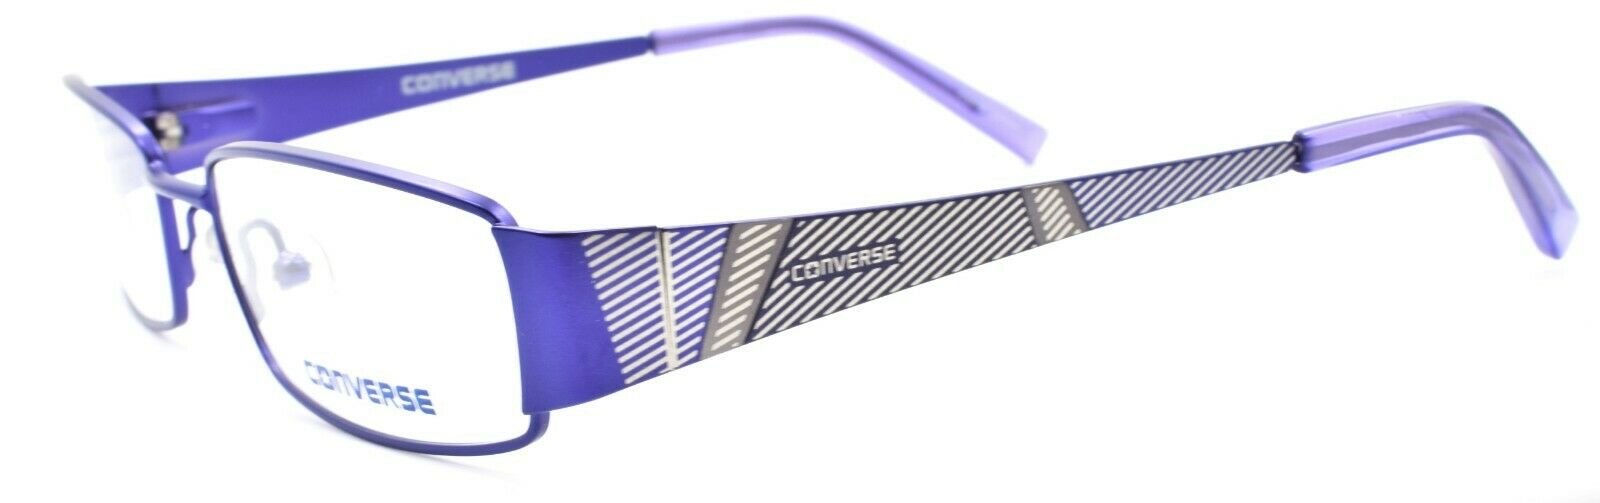 1-CONVERSE Q003 Women's Eyeglasses Frames 50-17-135 Purple + CASE-751286245035-IKSpecs